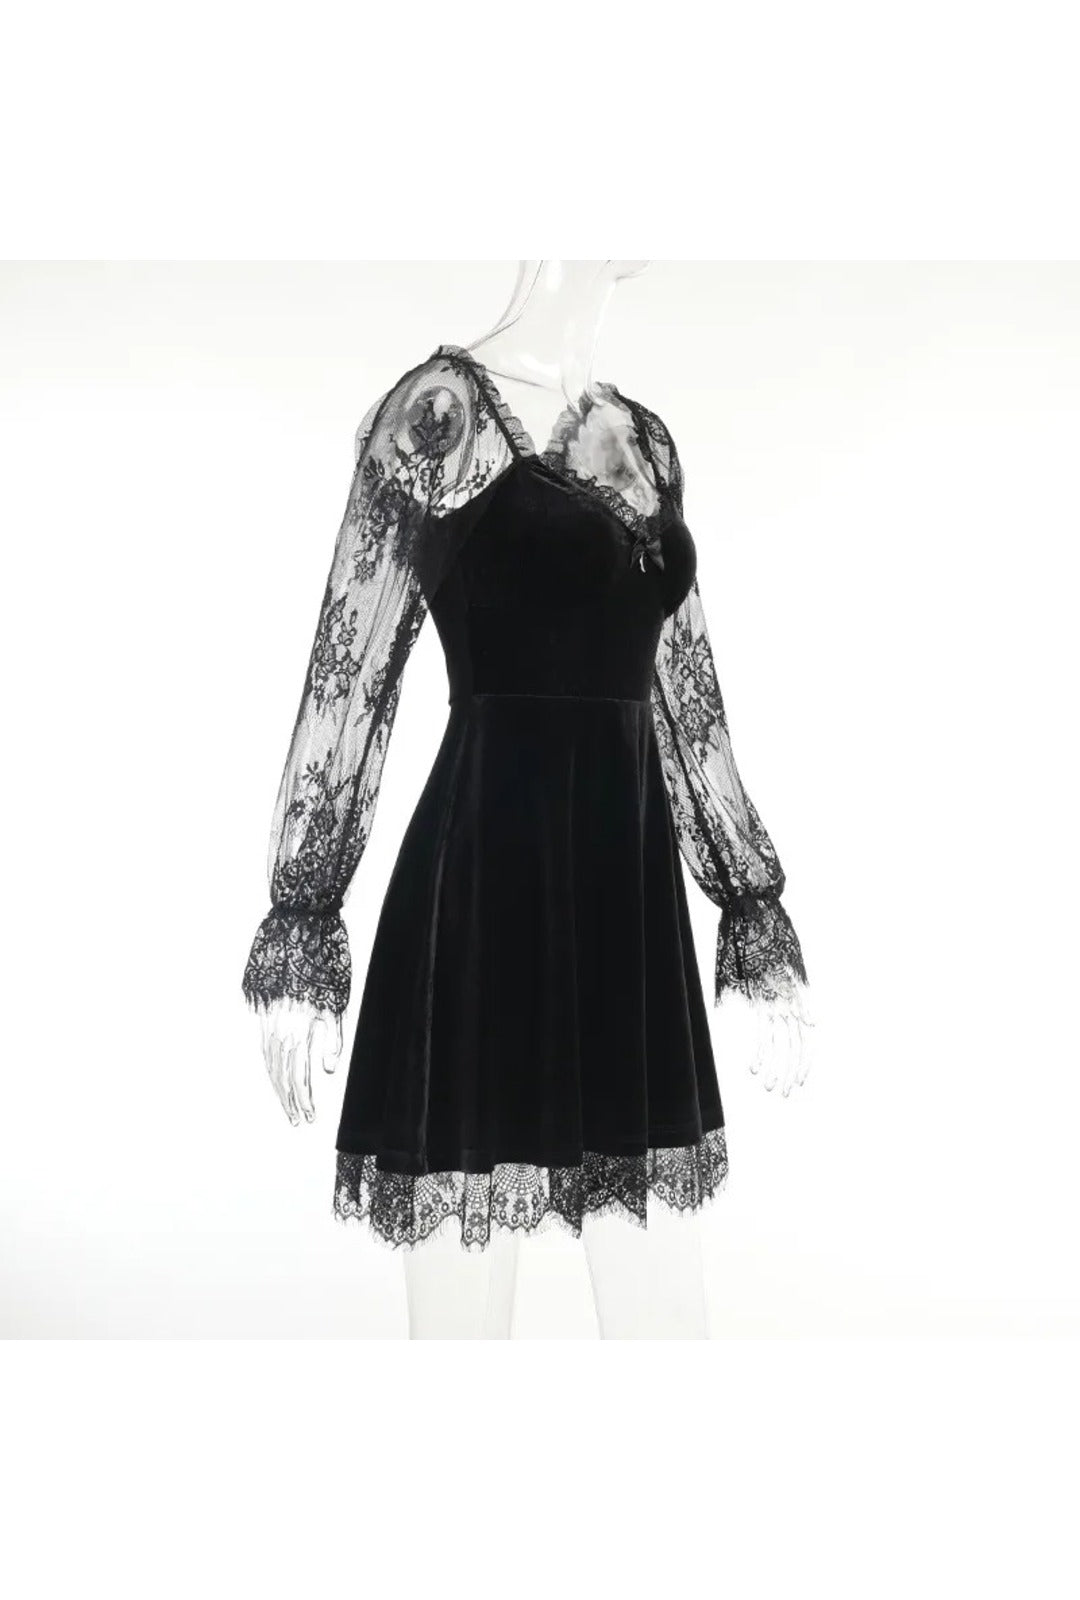 Black Long Sleeve Lace Gothic Dress